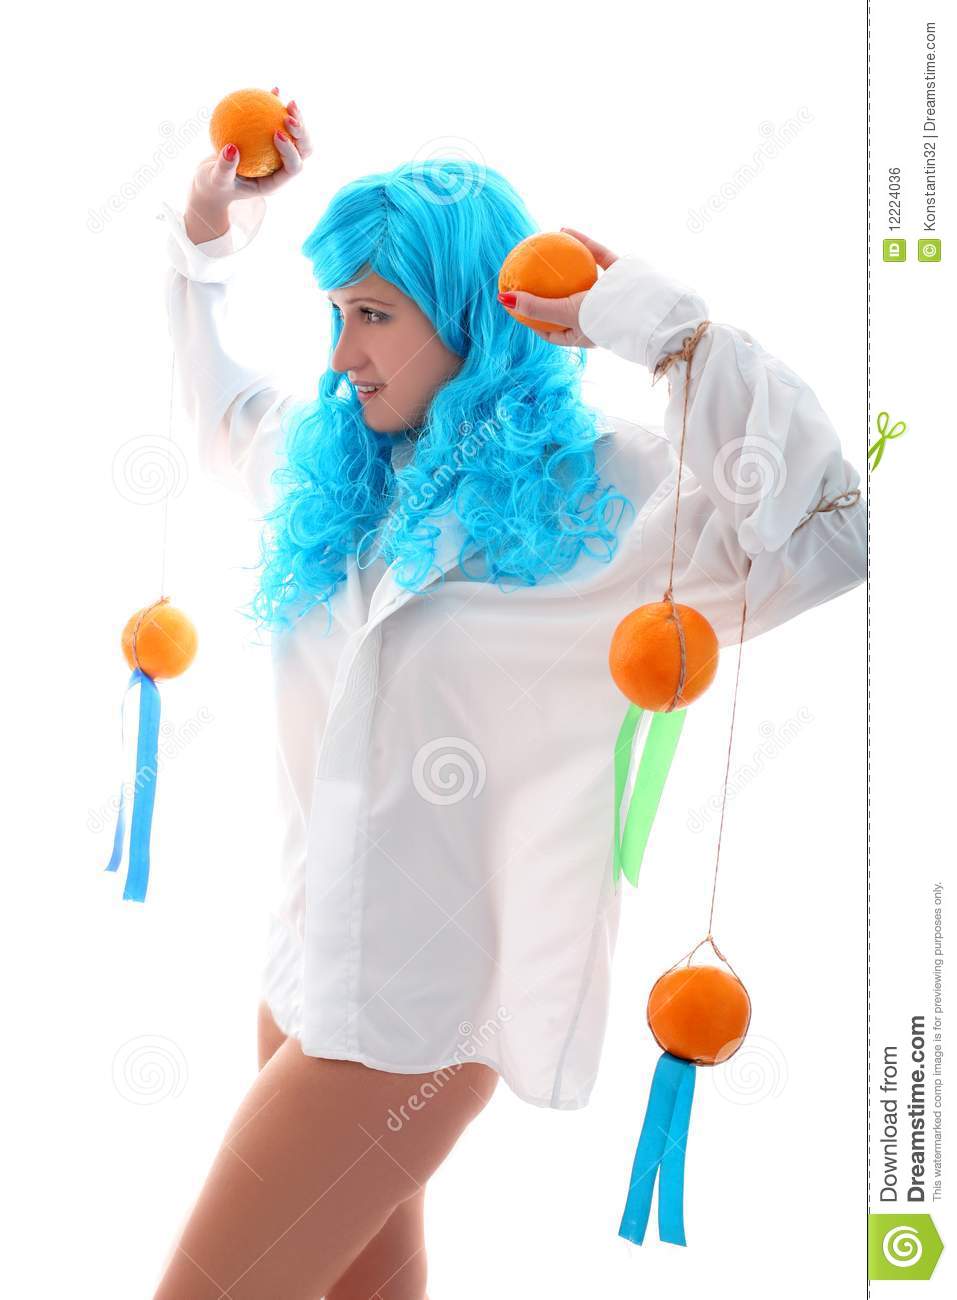 Blue Hairs Girl Vs Fruits Royalty Free Stock Image   Image  12224036